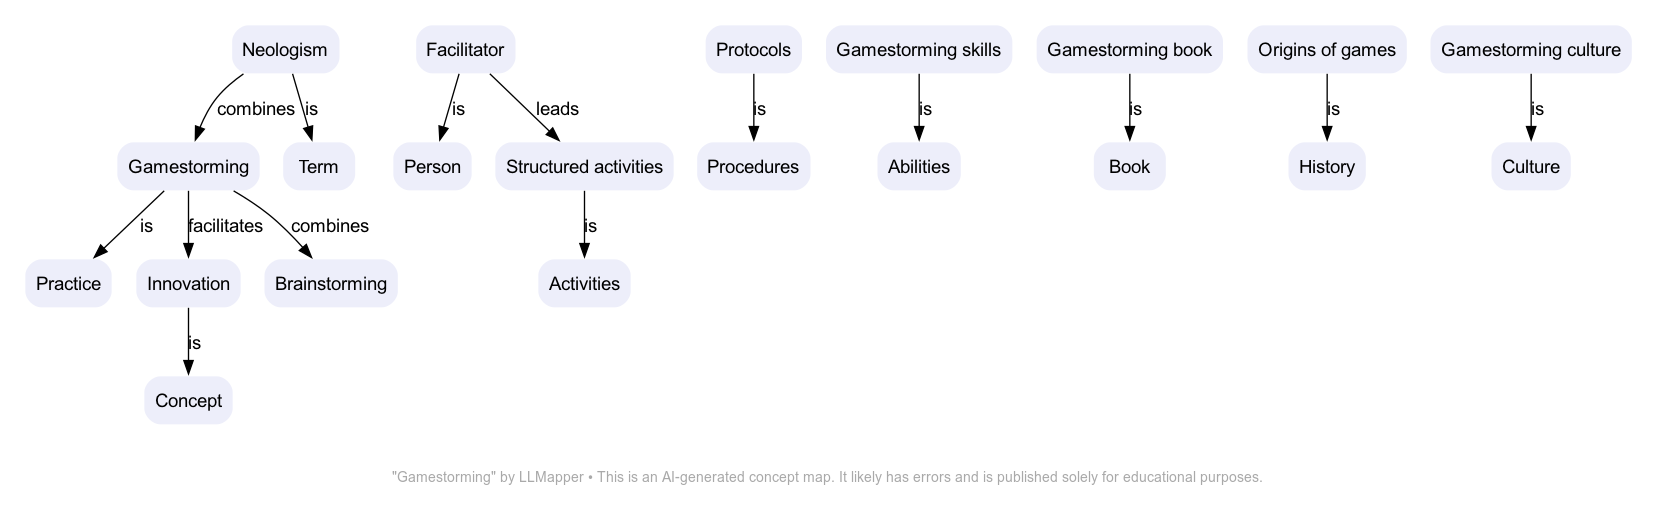 Gamestorming - A concept map by LLMapper